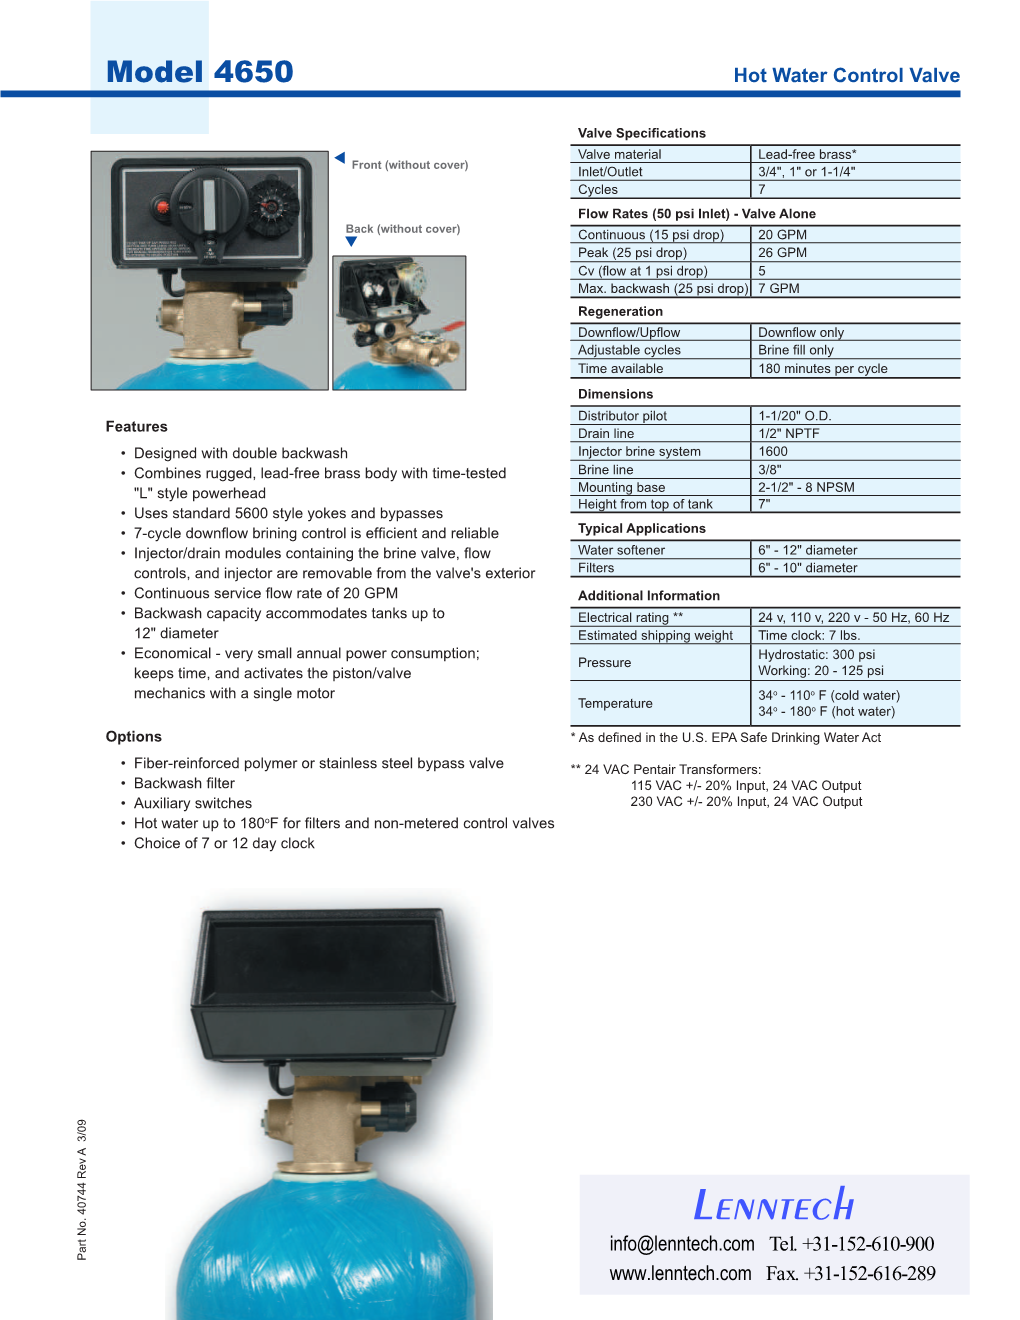 Model 4650 Hot Water Control Valve